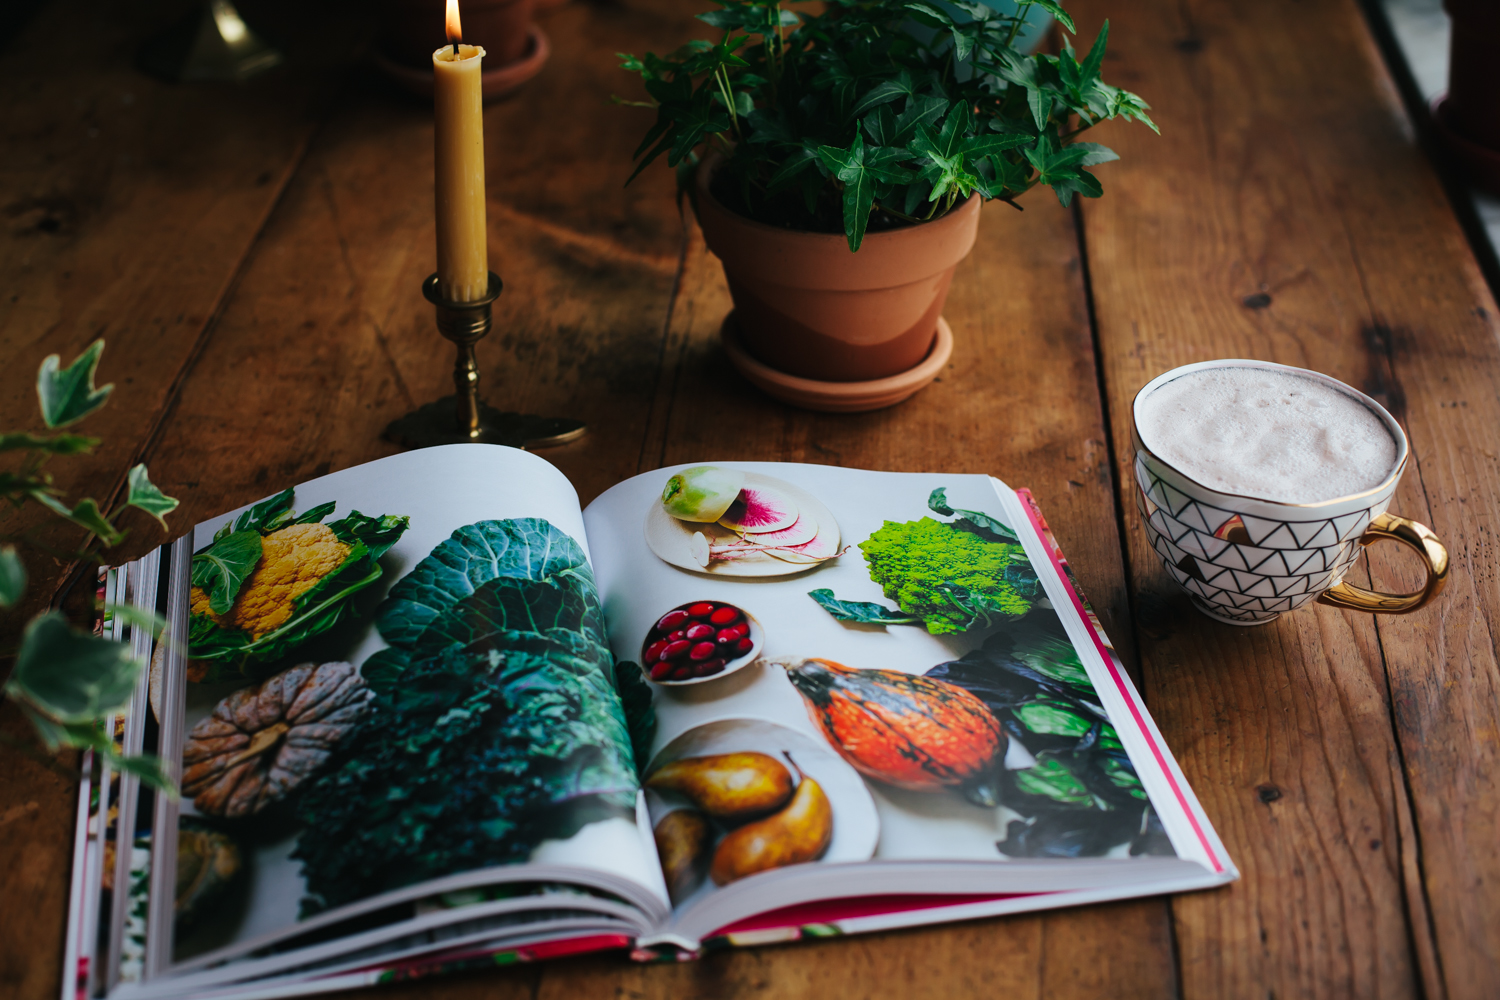 Simply Vibrant, a new cookbook by Anya Kassoff and Masha Davydova